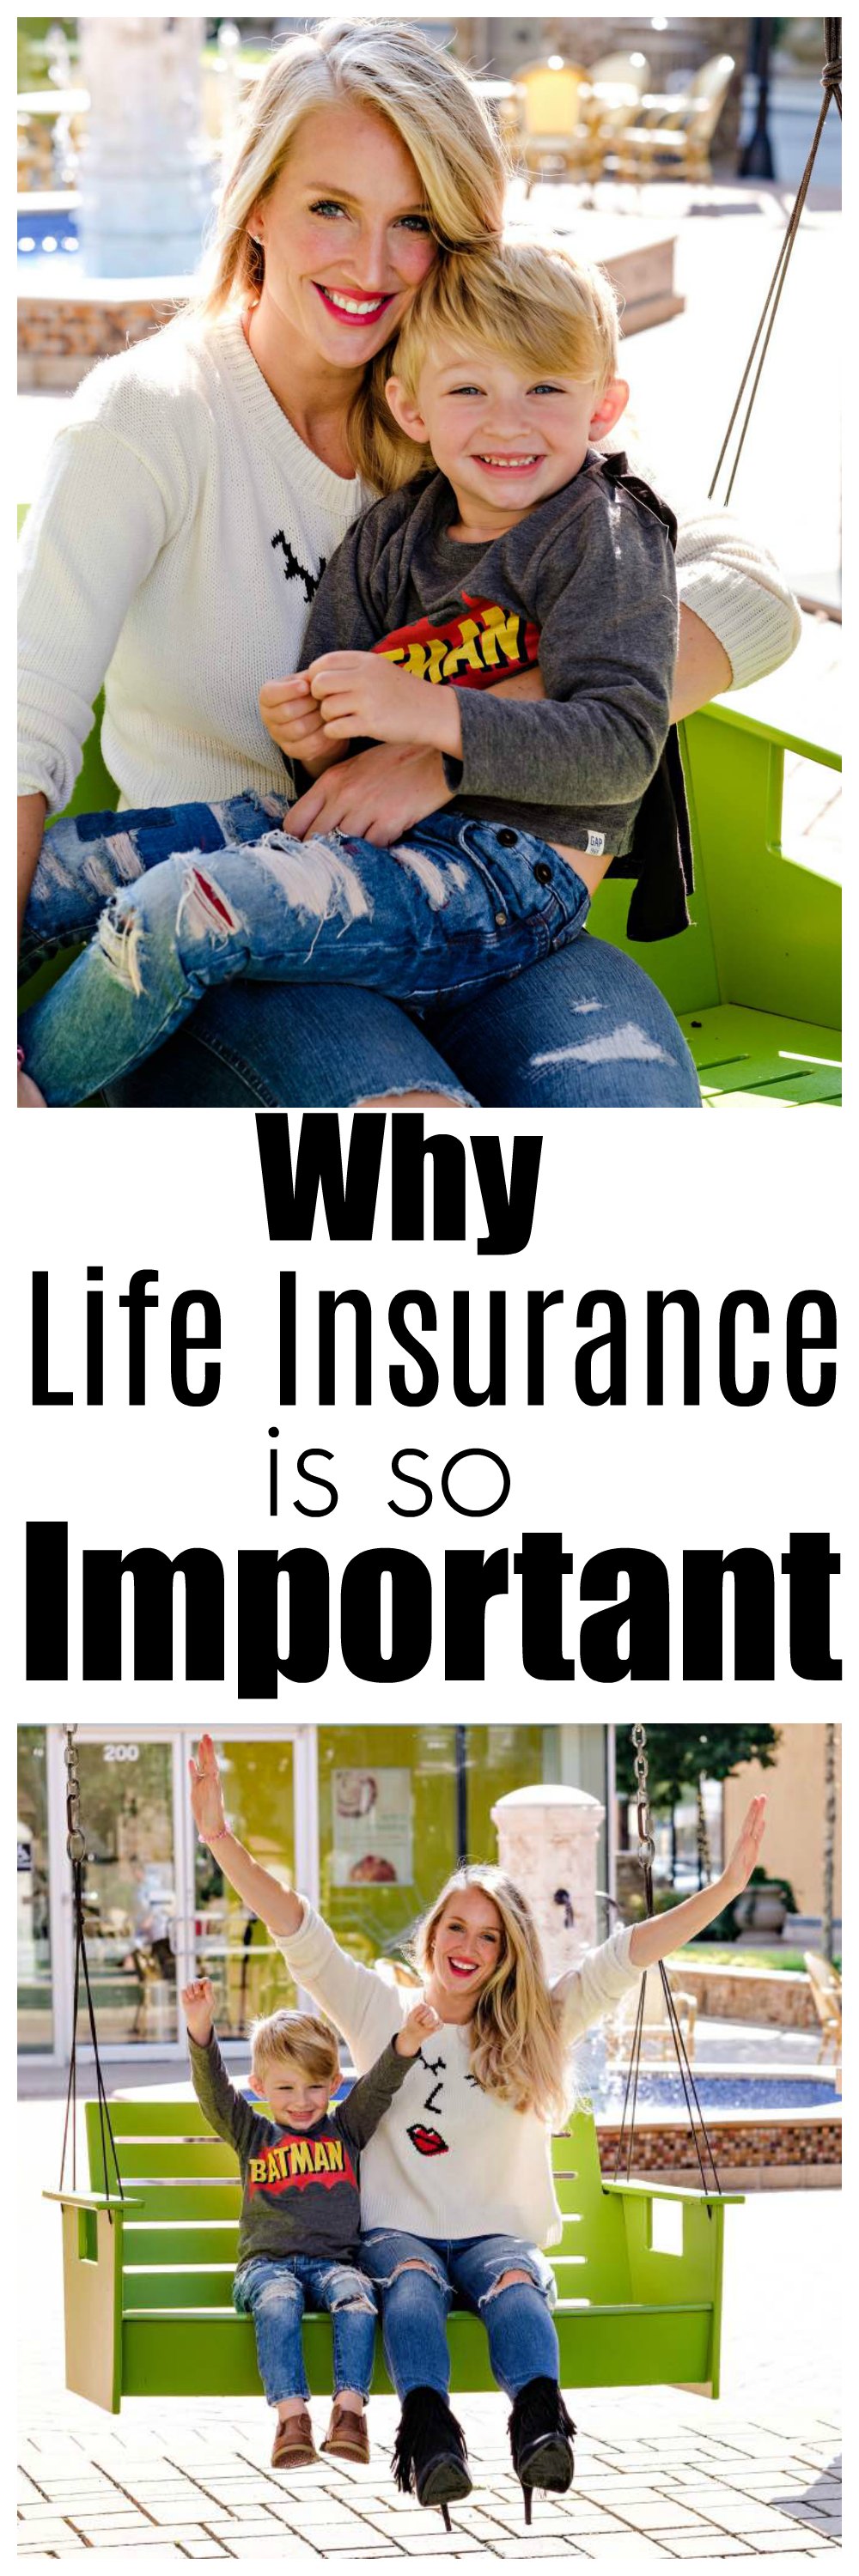 Why Life Insurance is SO Important by Atlanta mom blogger Happily Hughes